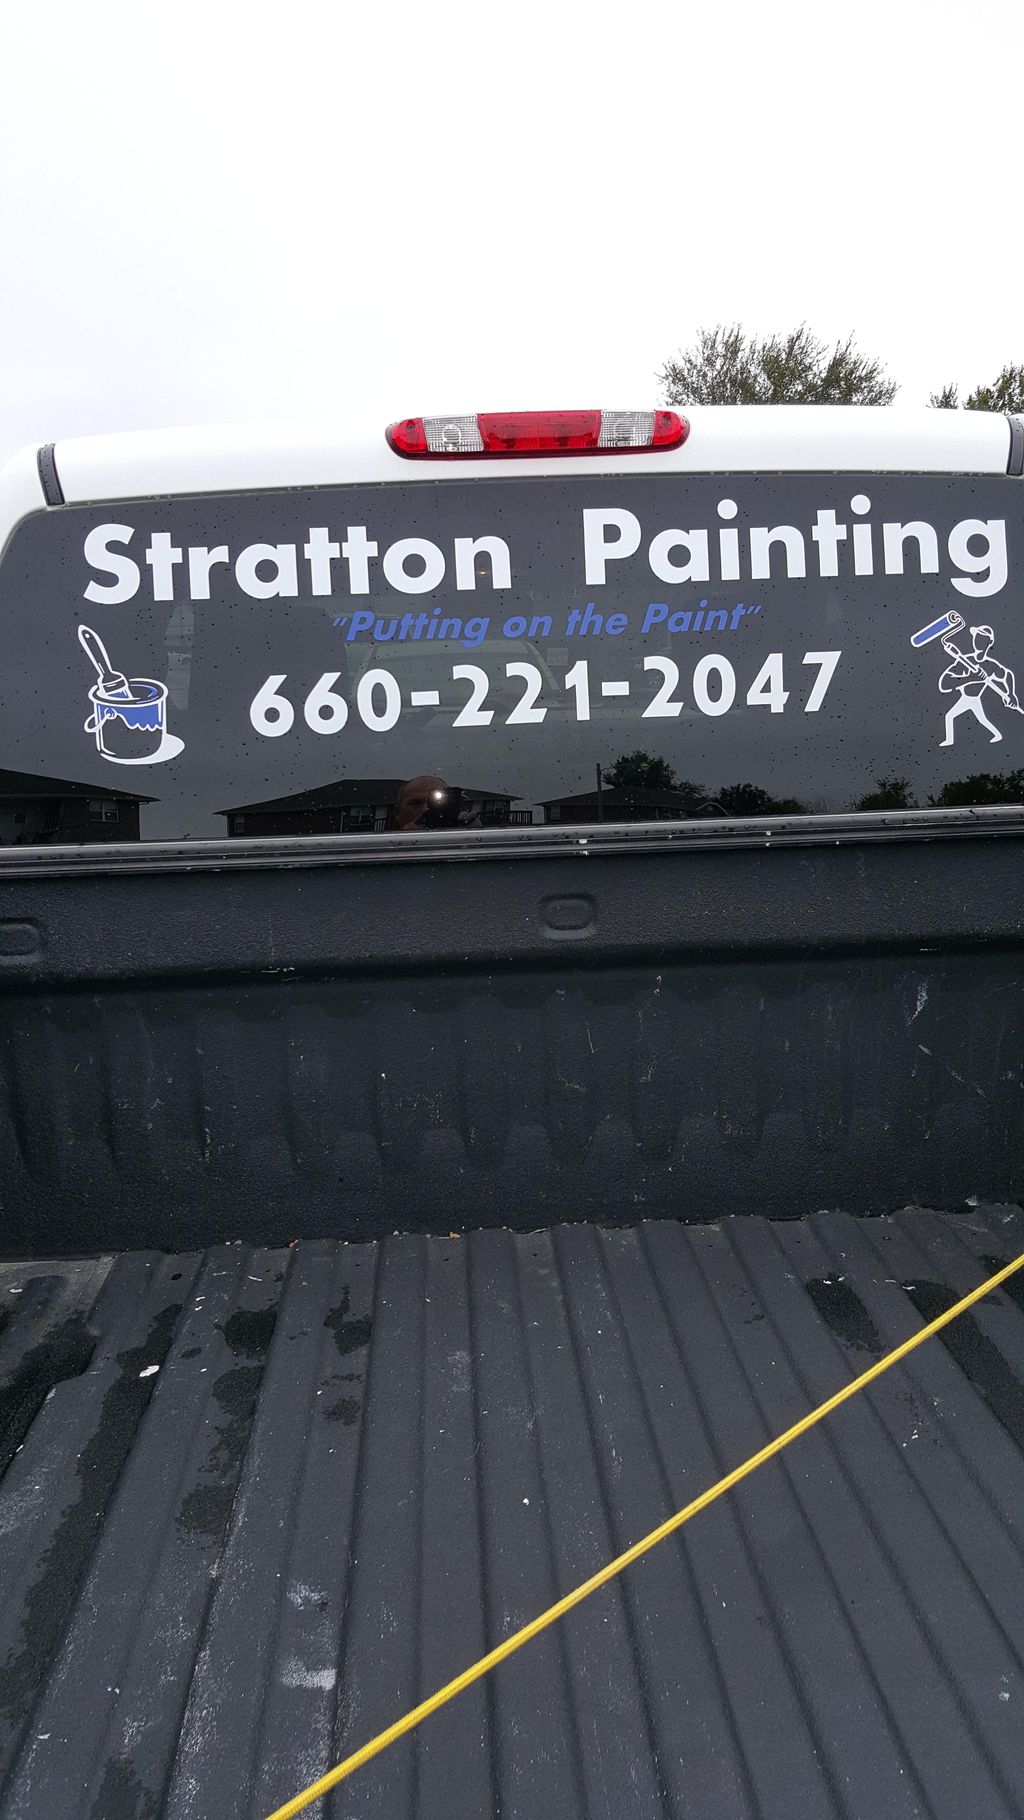 Stratton Painting